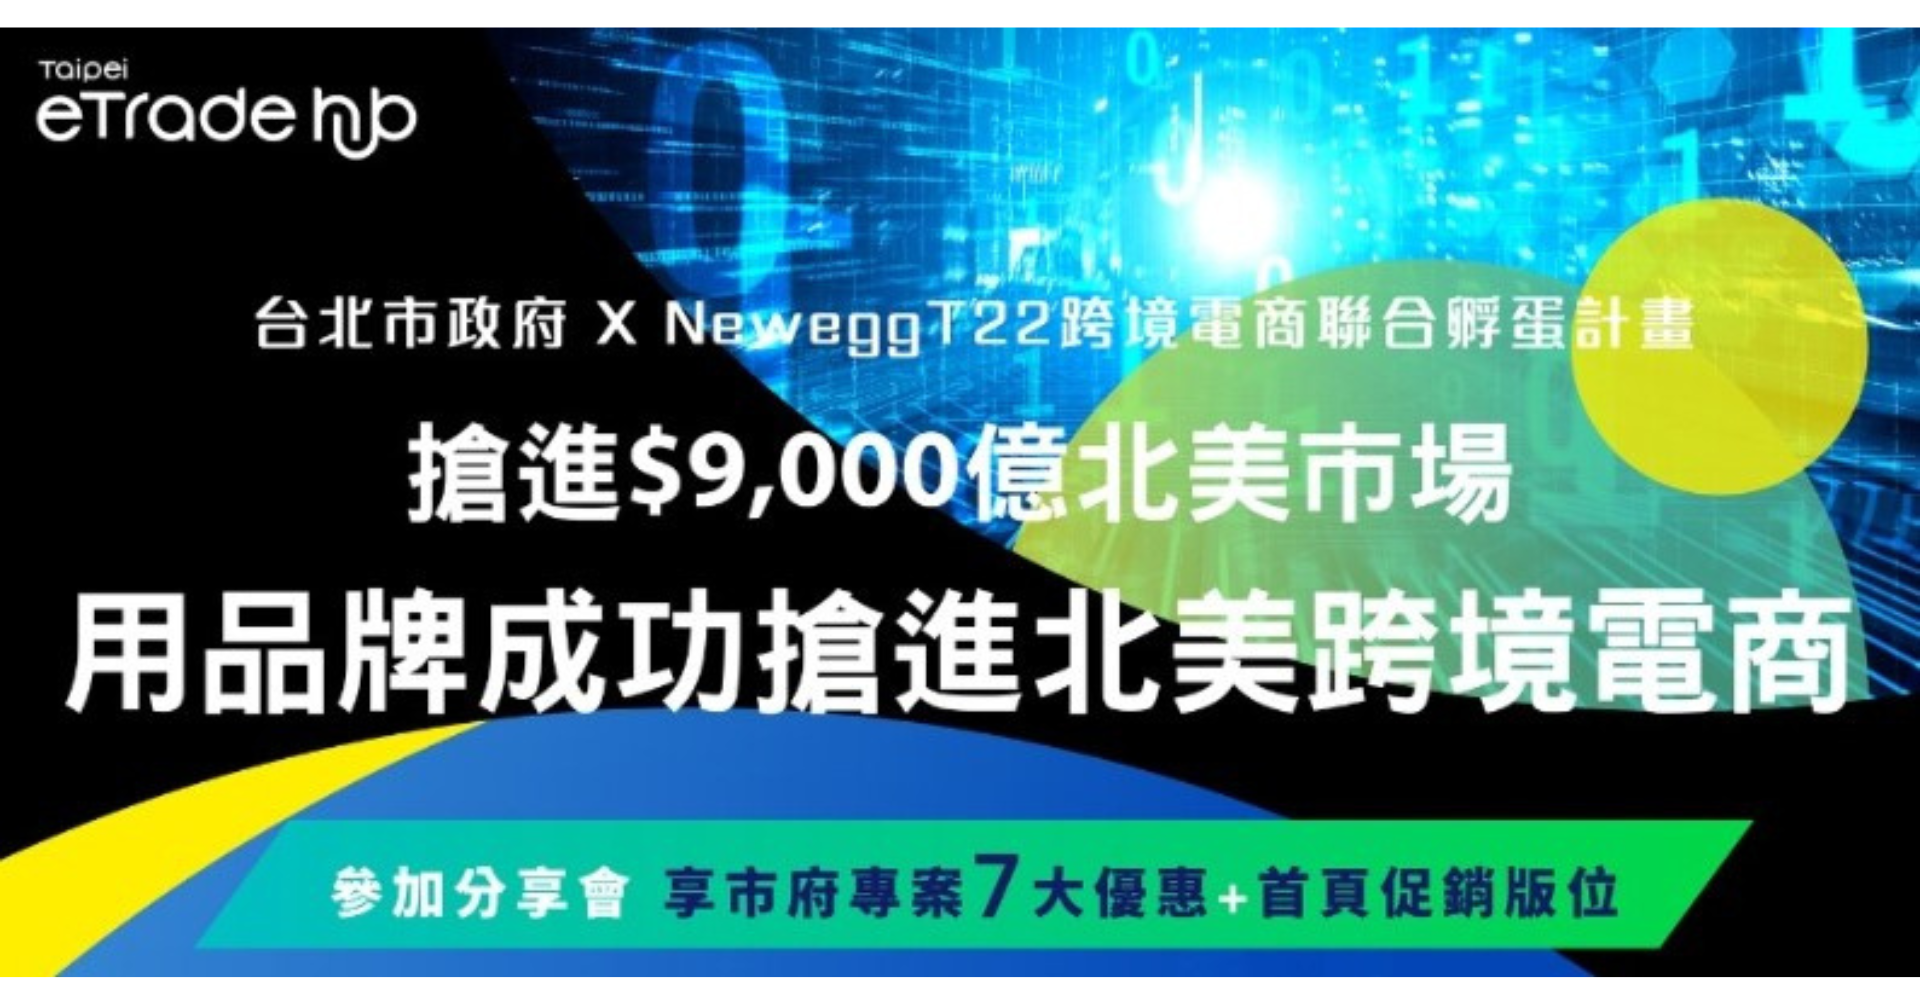 2022/09/06【Newegg T22孵蛋計畫分享會Ⅲ】用品牌成功搶進北美跨境電商